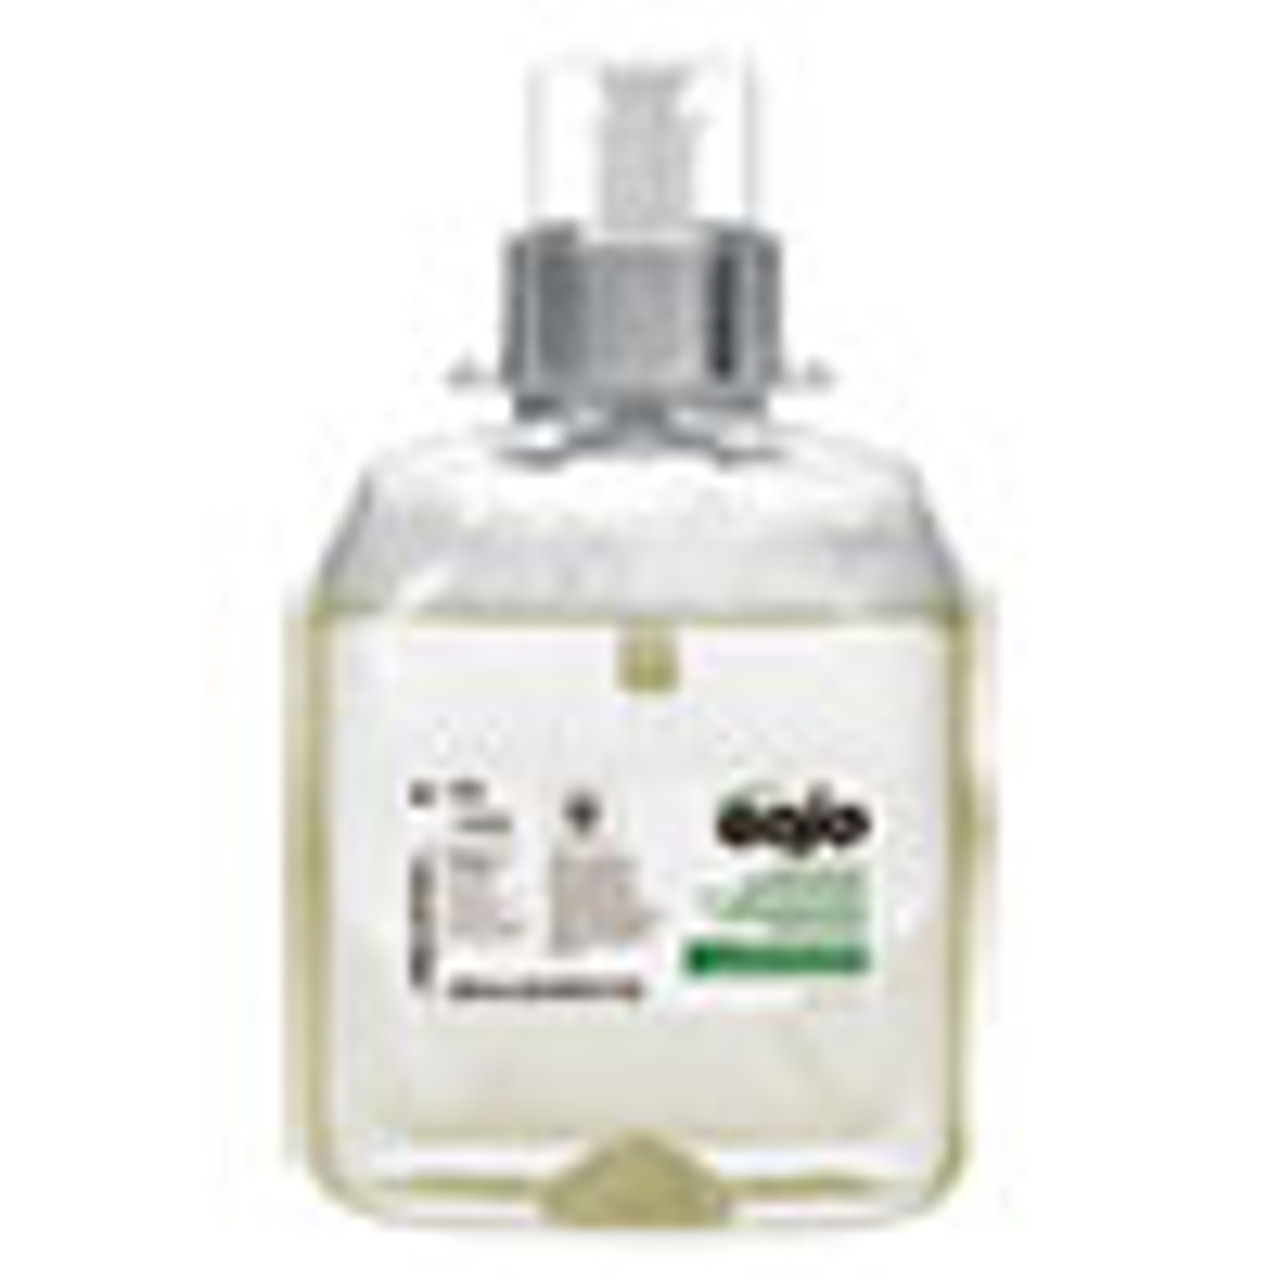 Gojo Green Certified Foam Hand Cleaner, 1250 ml Refill, 4-carton